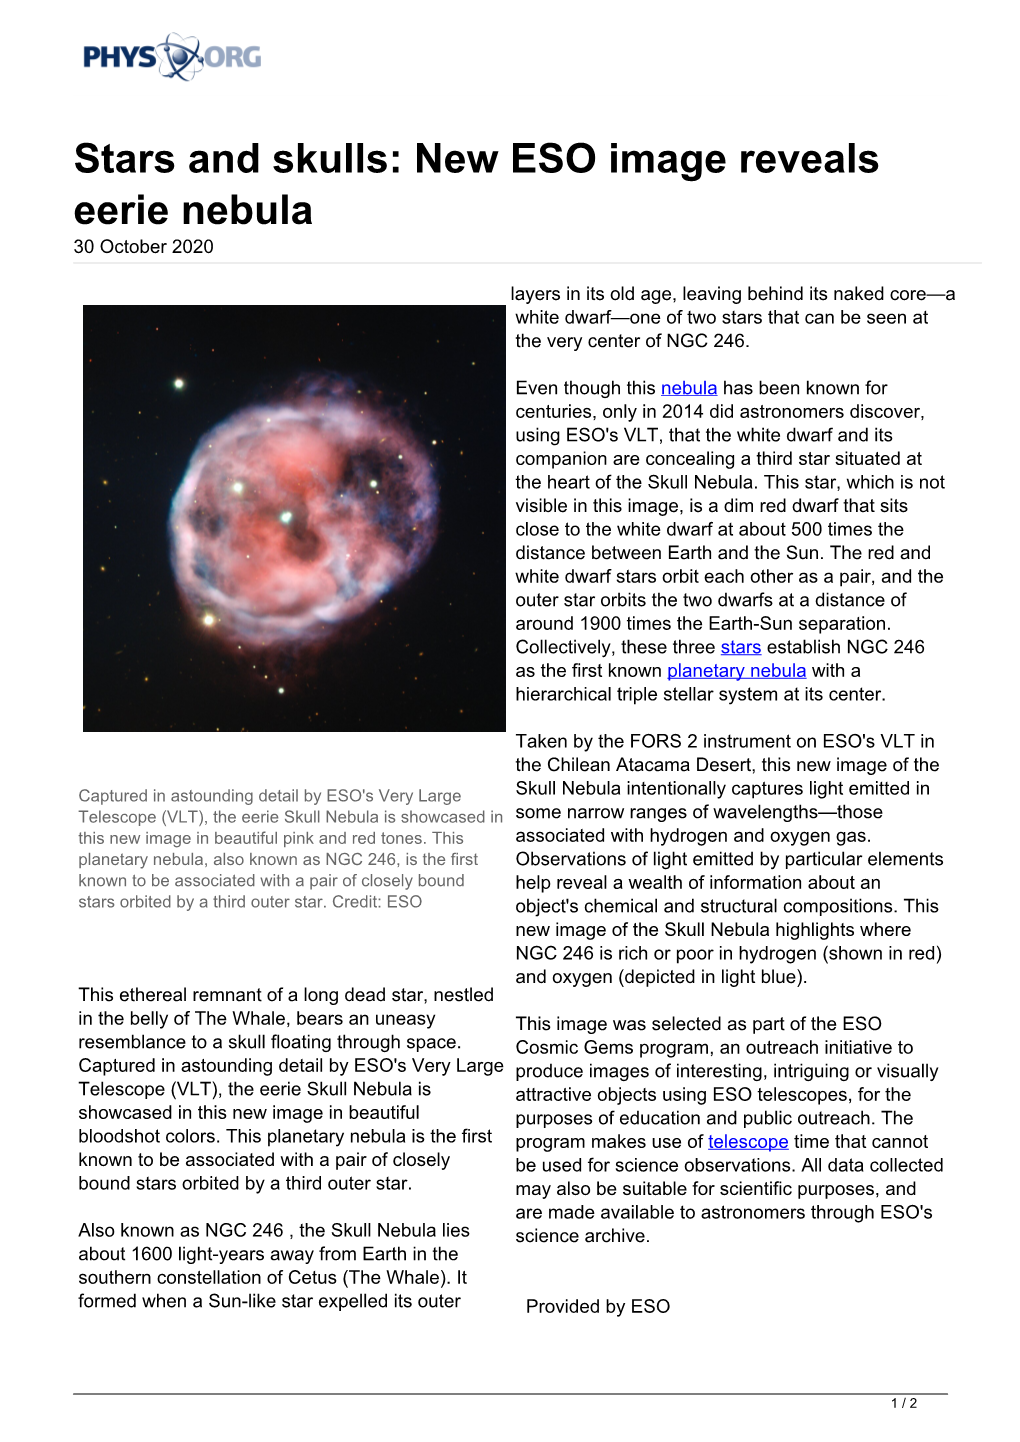 Stars and Skulls: New ESO Image Reveals Eerie Nebula 30 October 2020